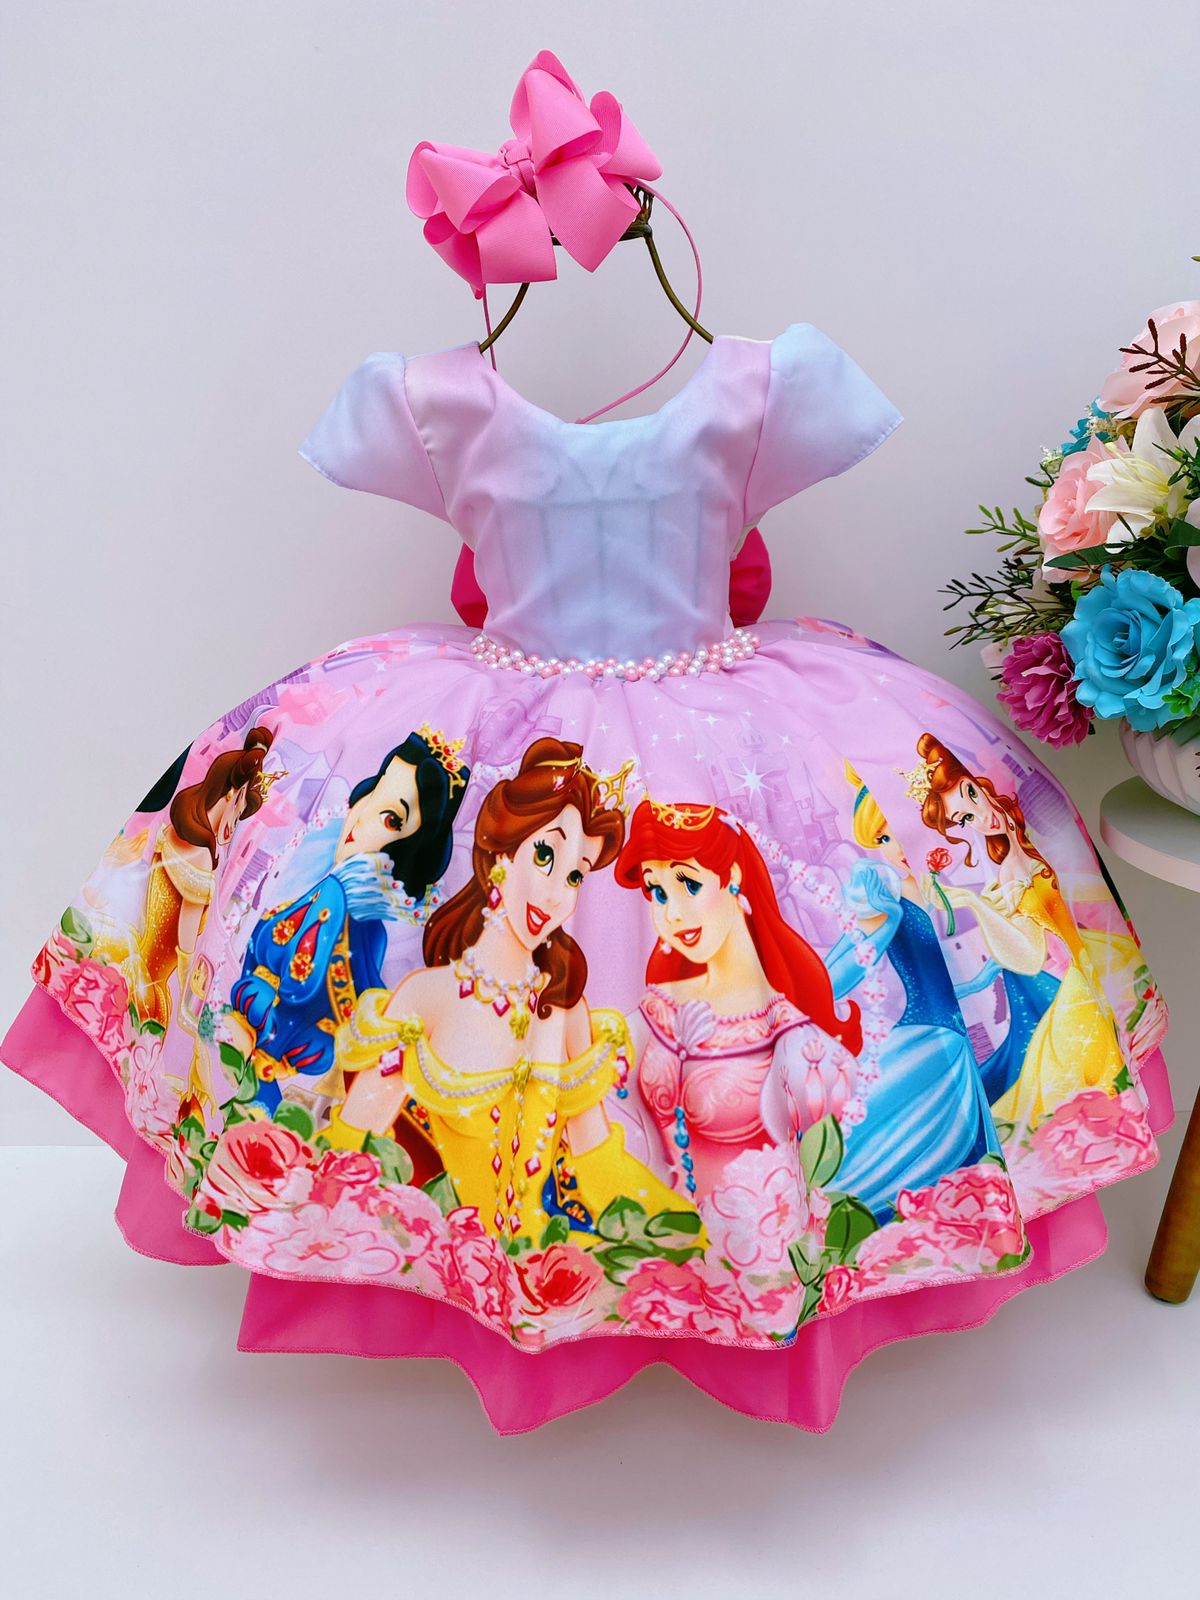 Vestido Infantil Princesas Colorido C/ Cinto de Pérolas Luxo